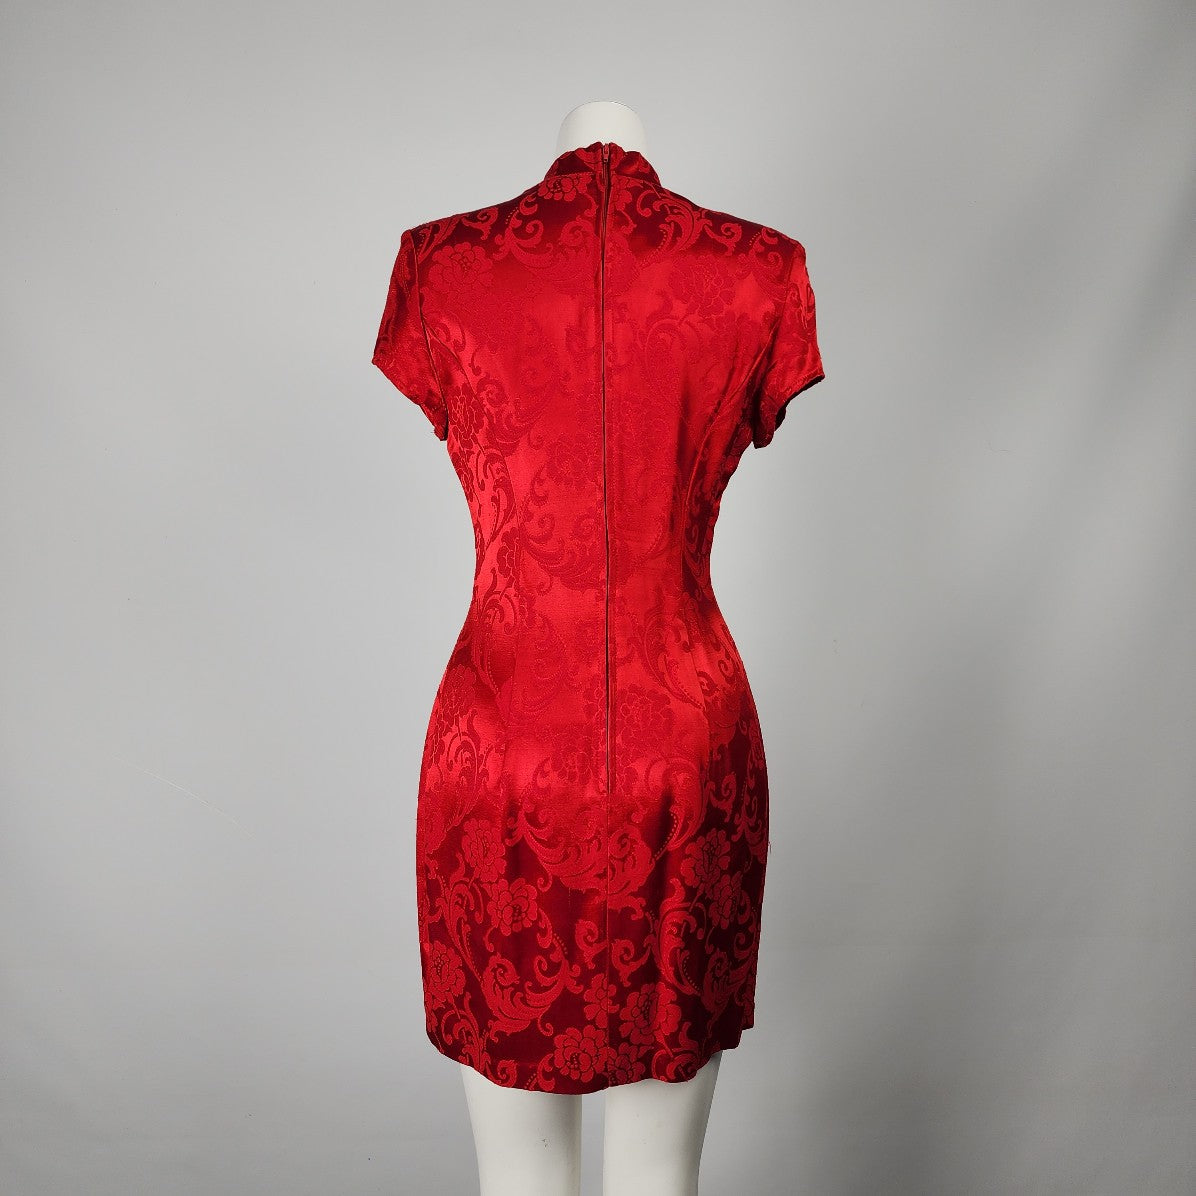 Vintage Roberta Red Cheongsam Dress Size S